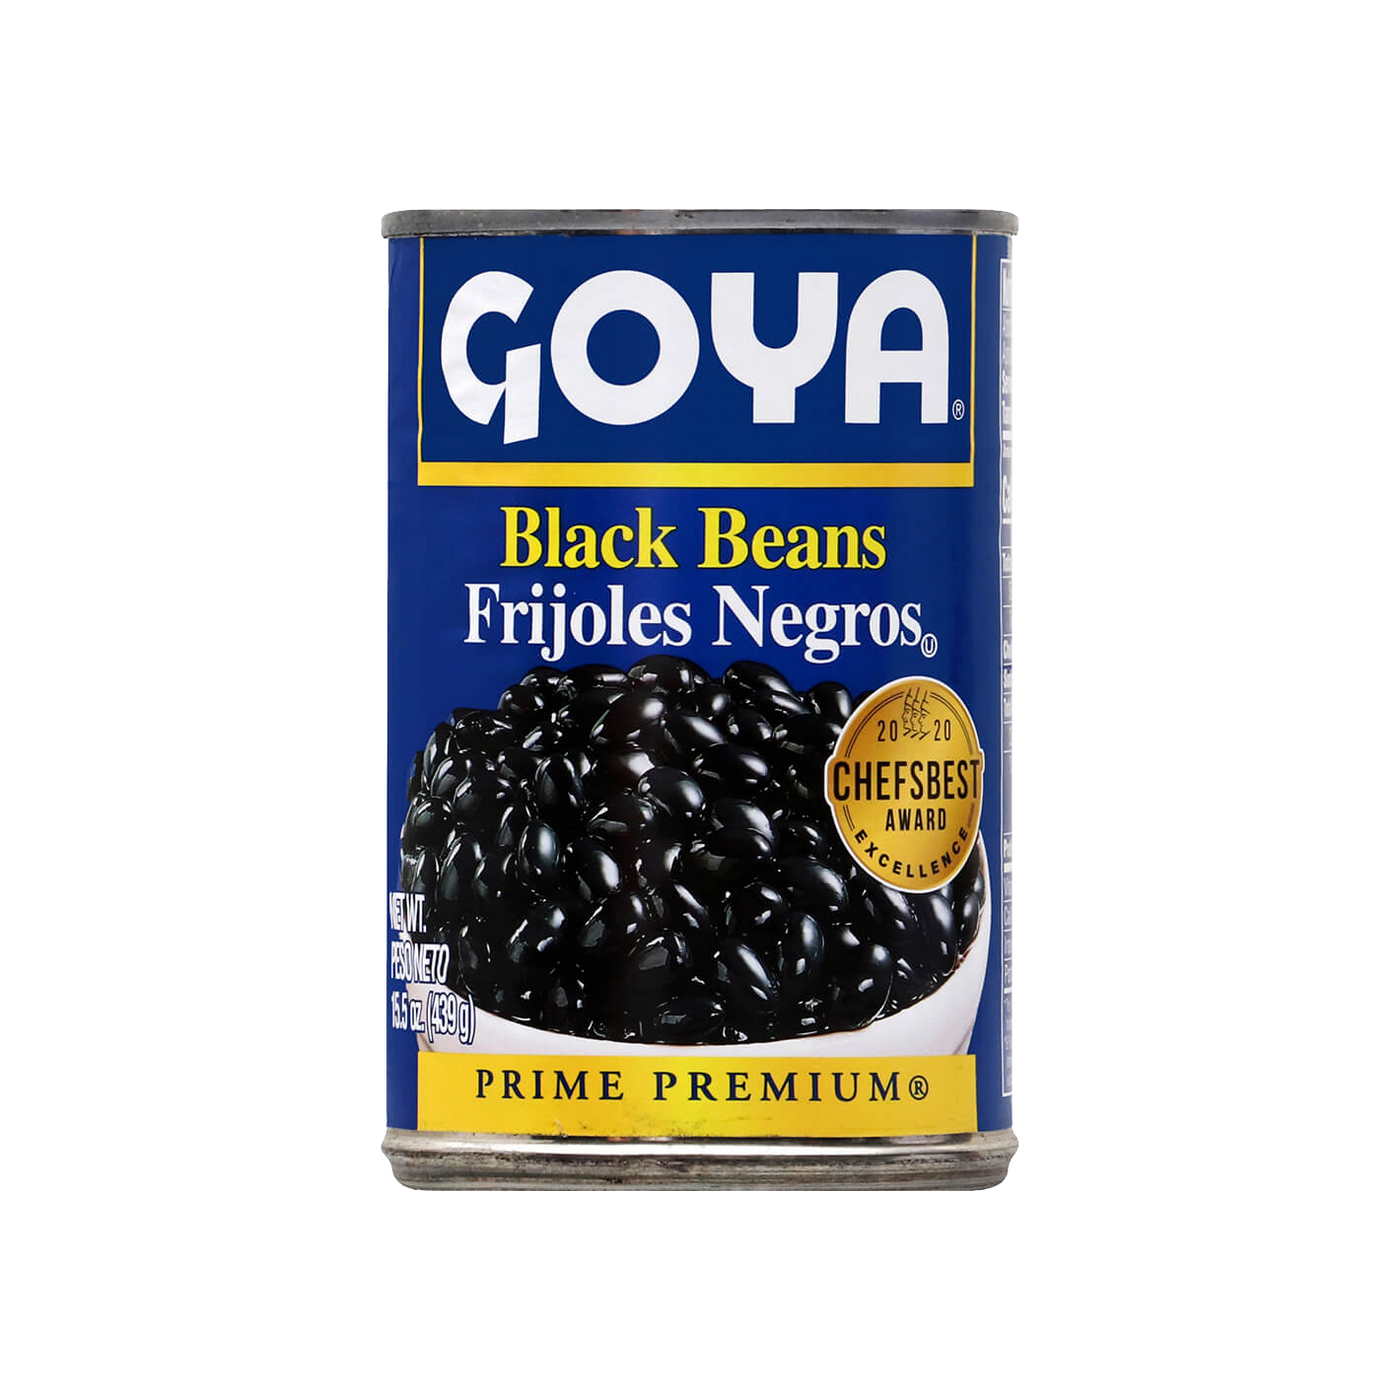   Goya Black Beans